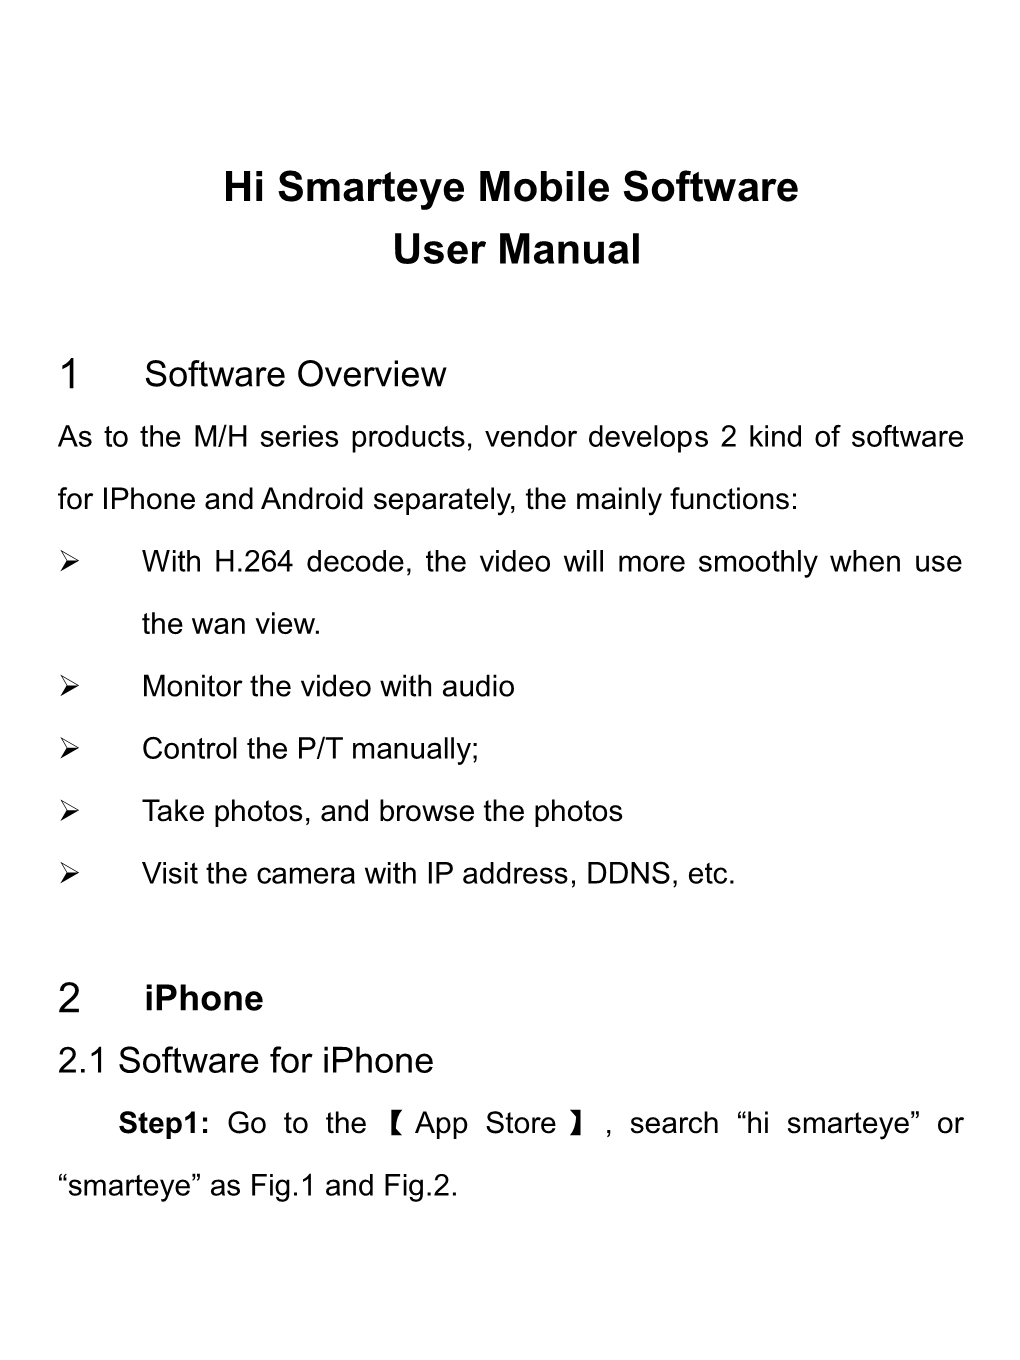 Hi Smarteye Mobile Software